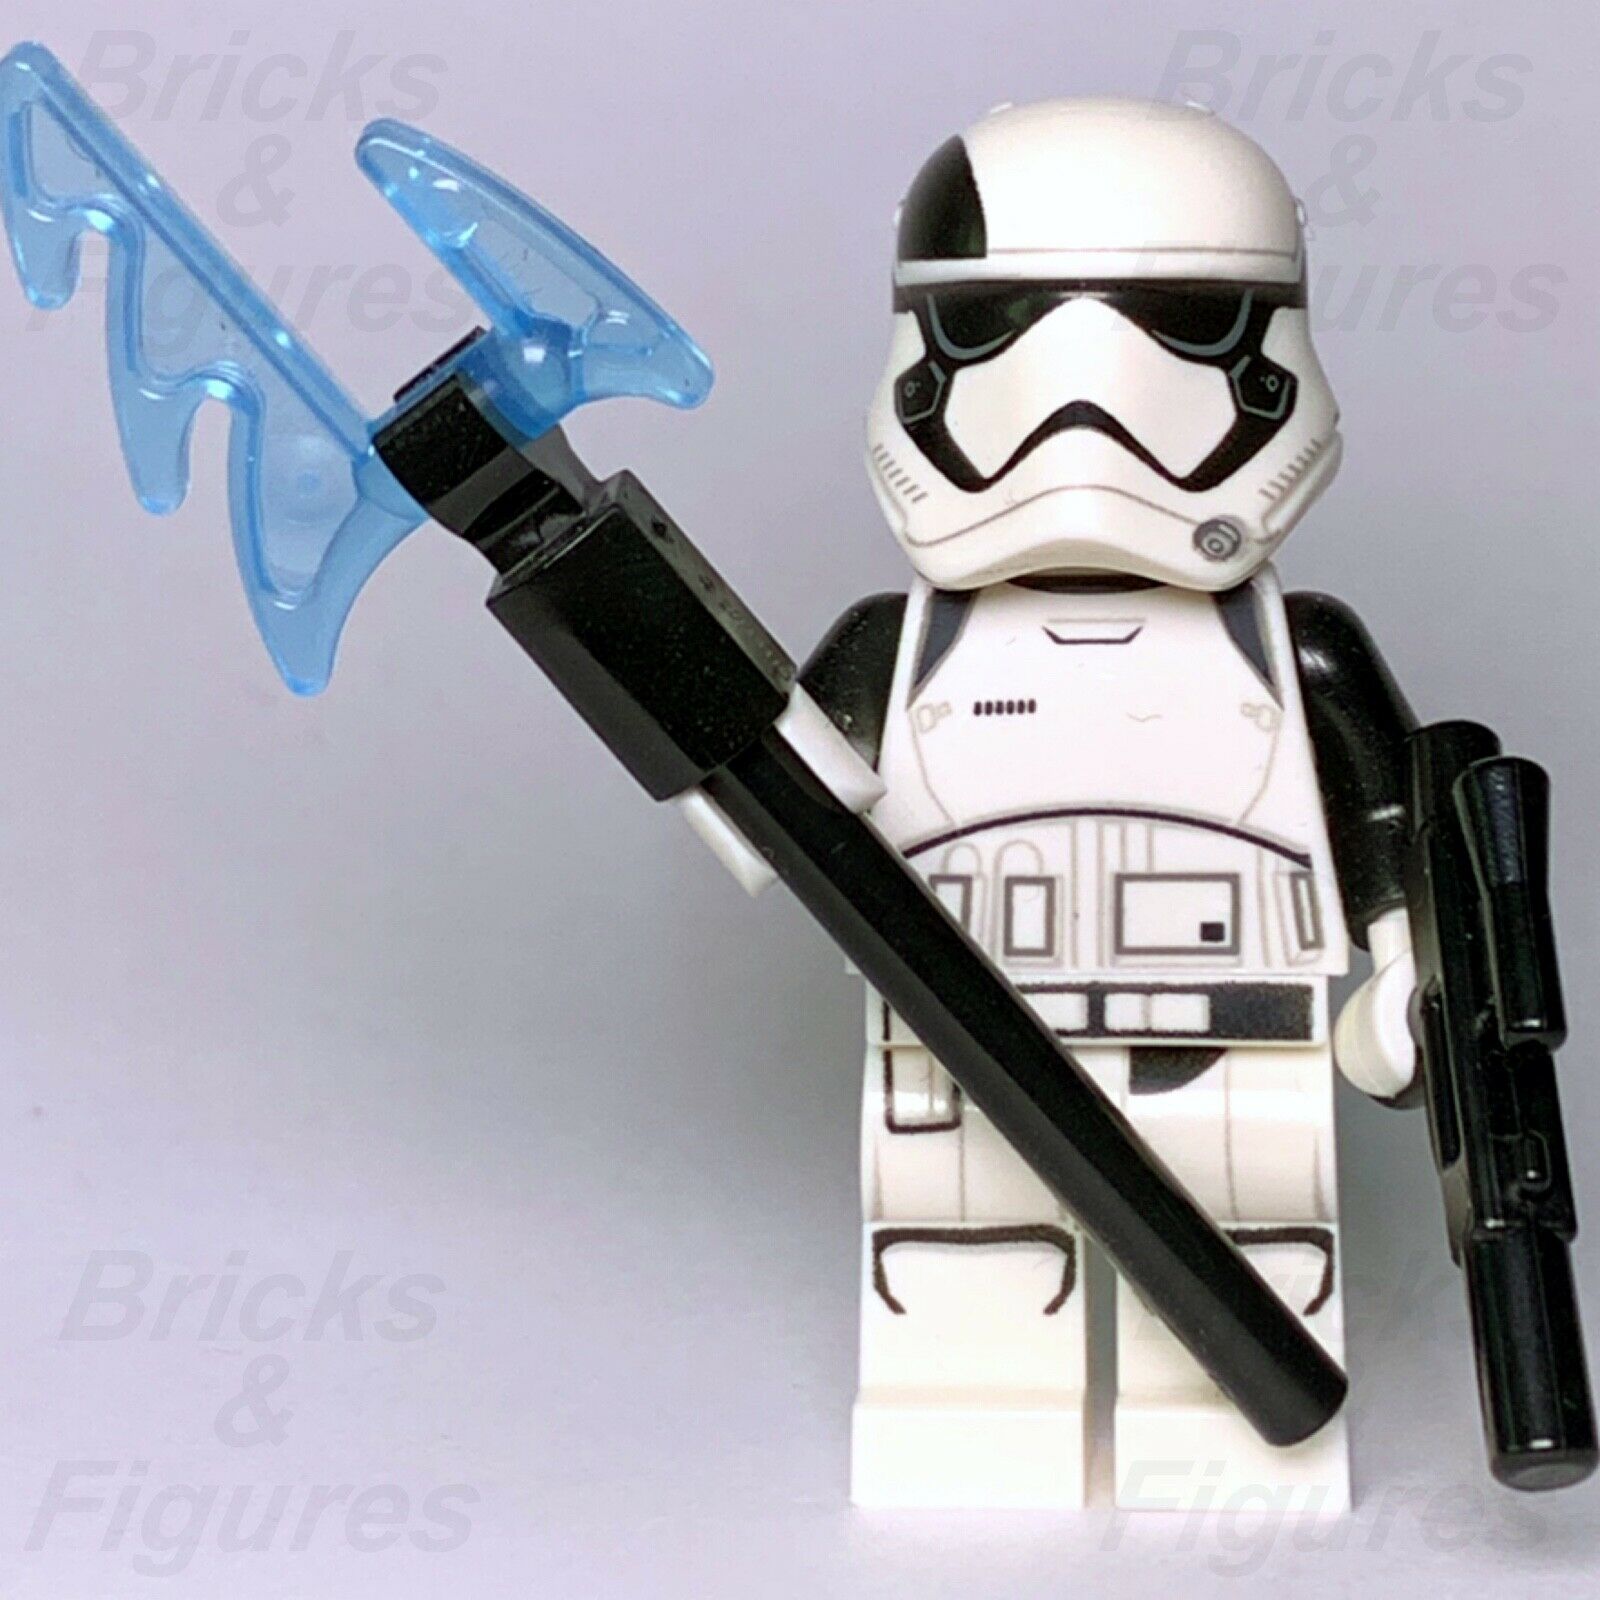 Star Wars LEGO First Order Stormtrooper Executioner The Last Jedi Minifig 75197 - Bricks & Figures